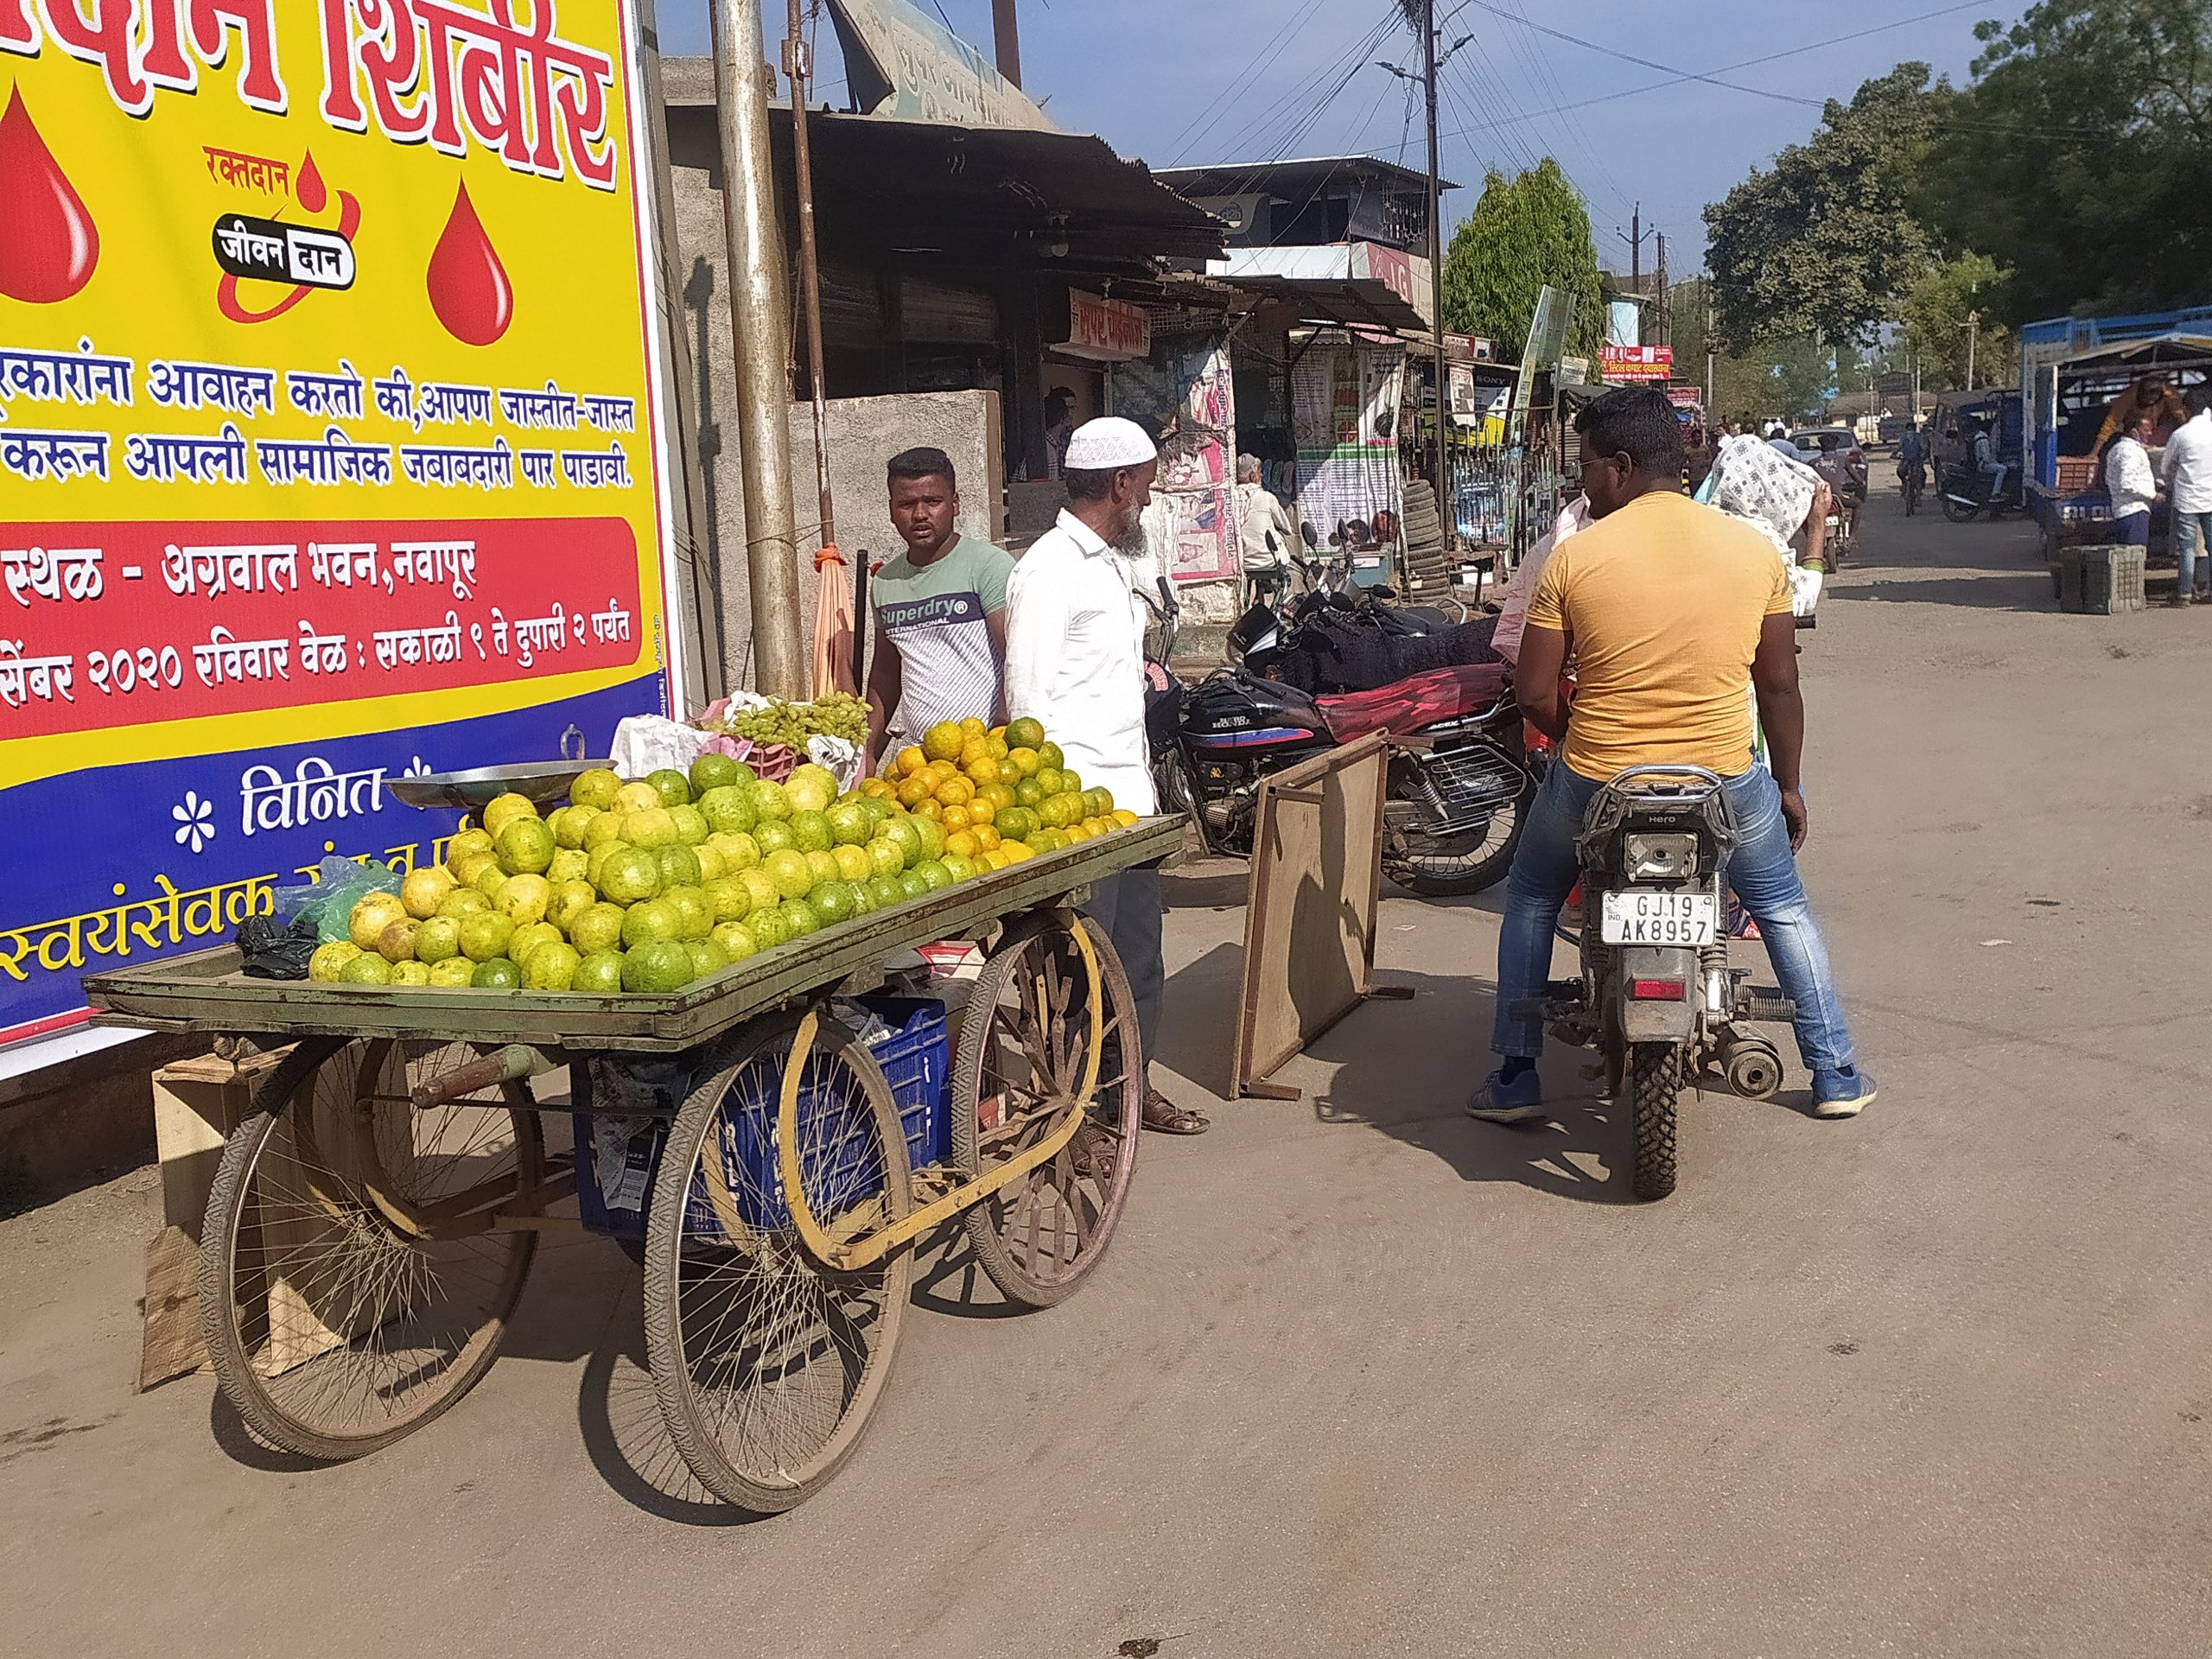 A fruit seller in a market